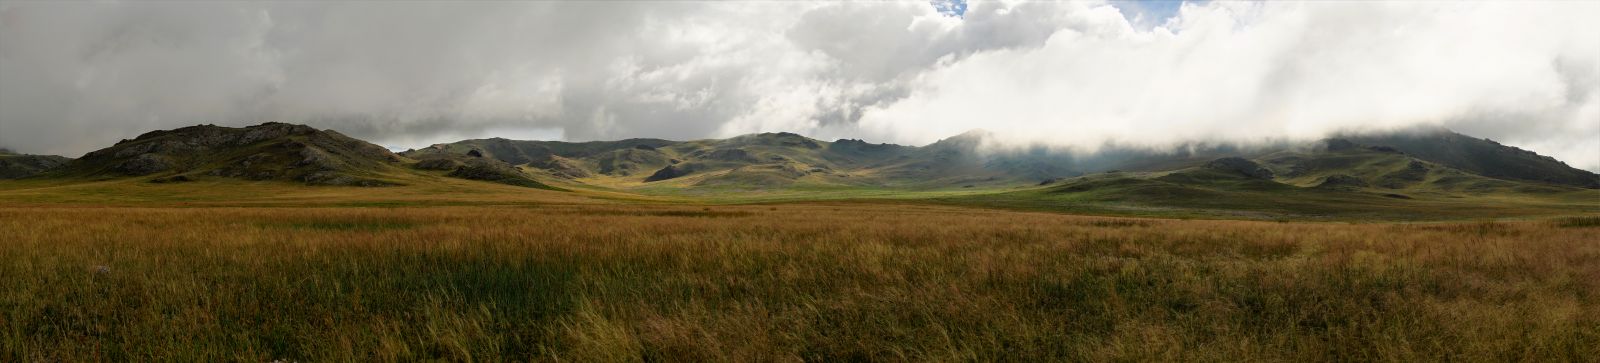 Mongolia, summer of 2016